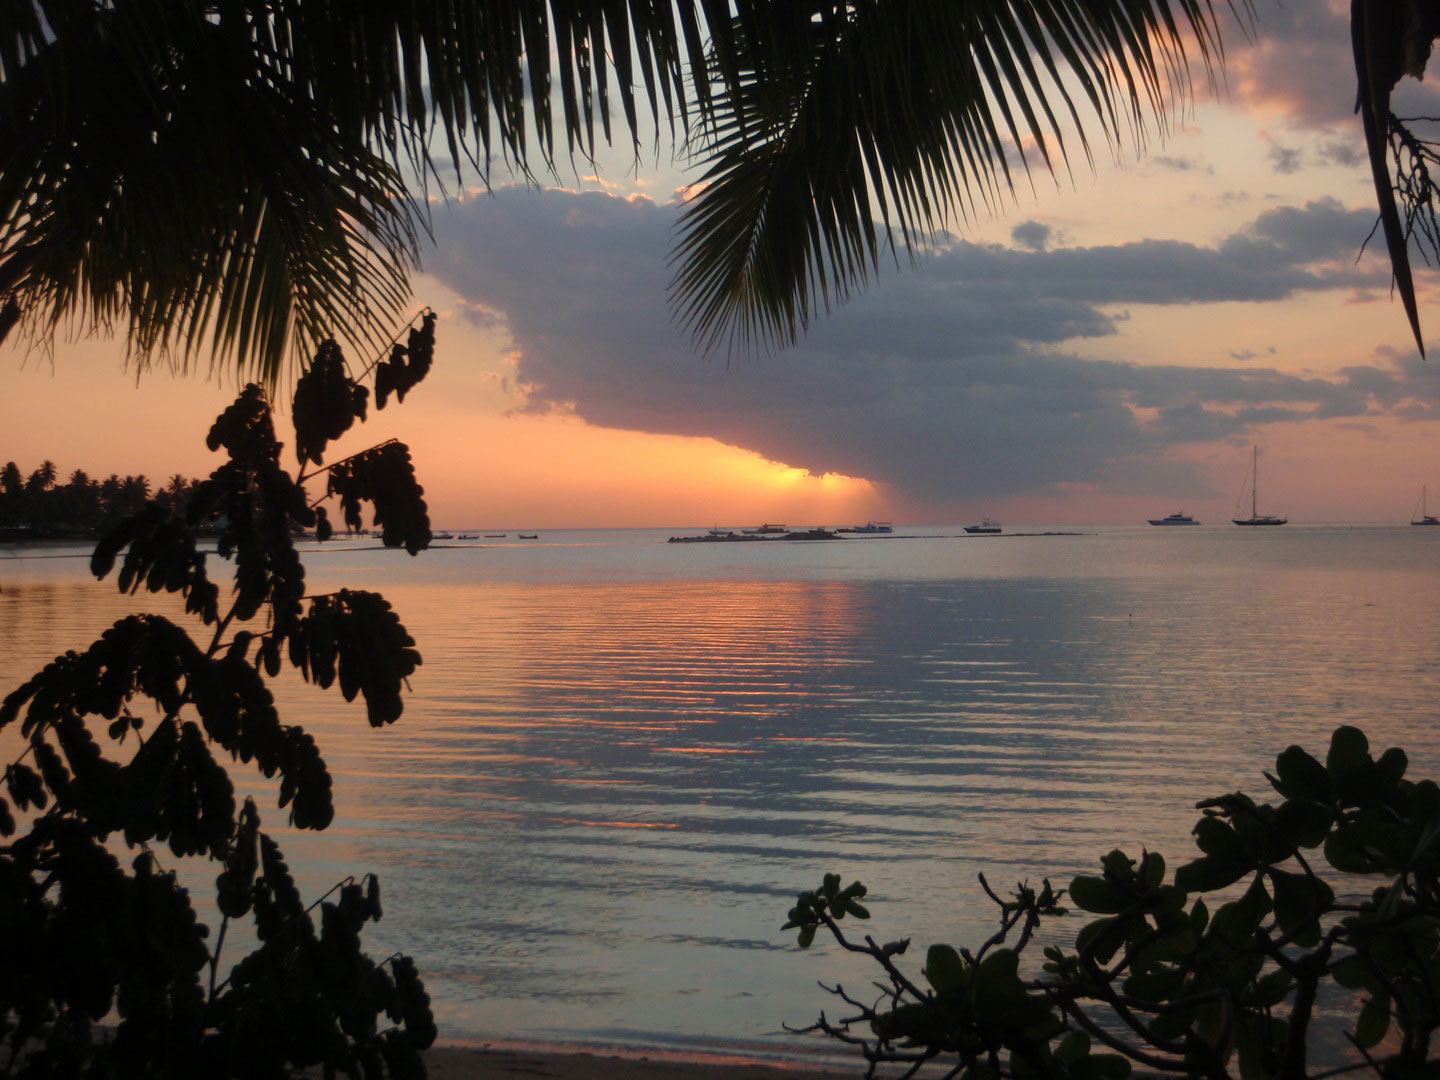 A stunning view of the sunset in a Fijian Beach